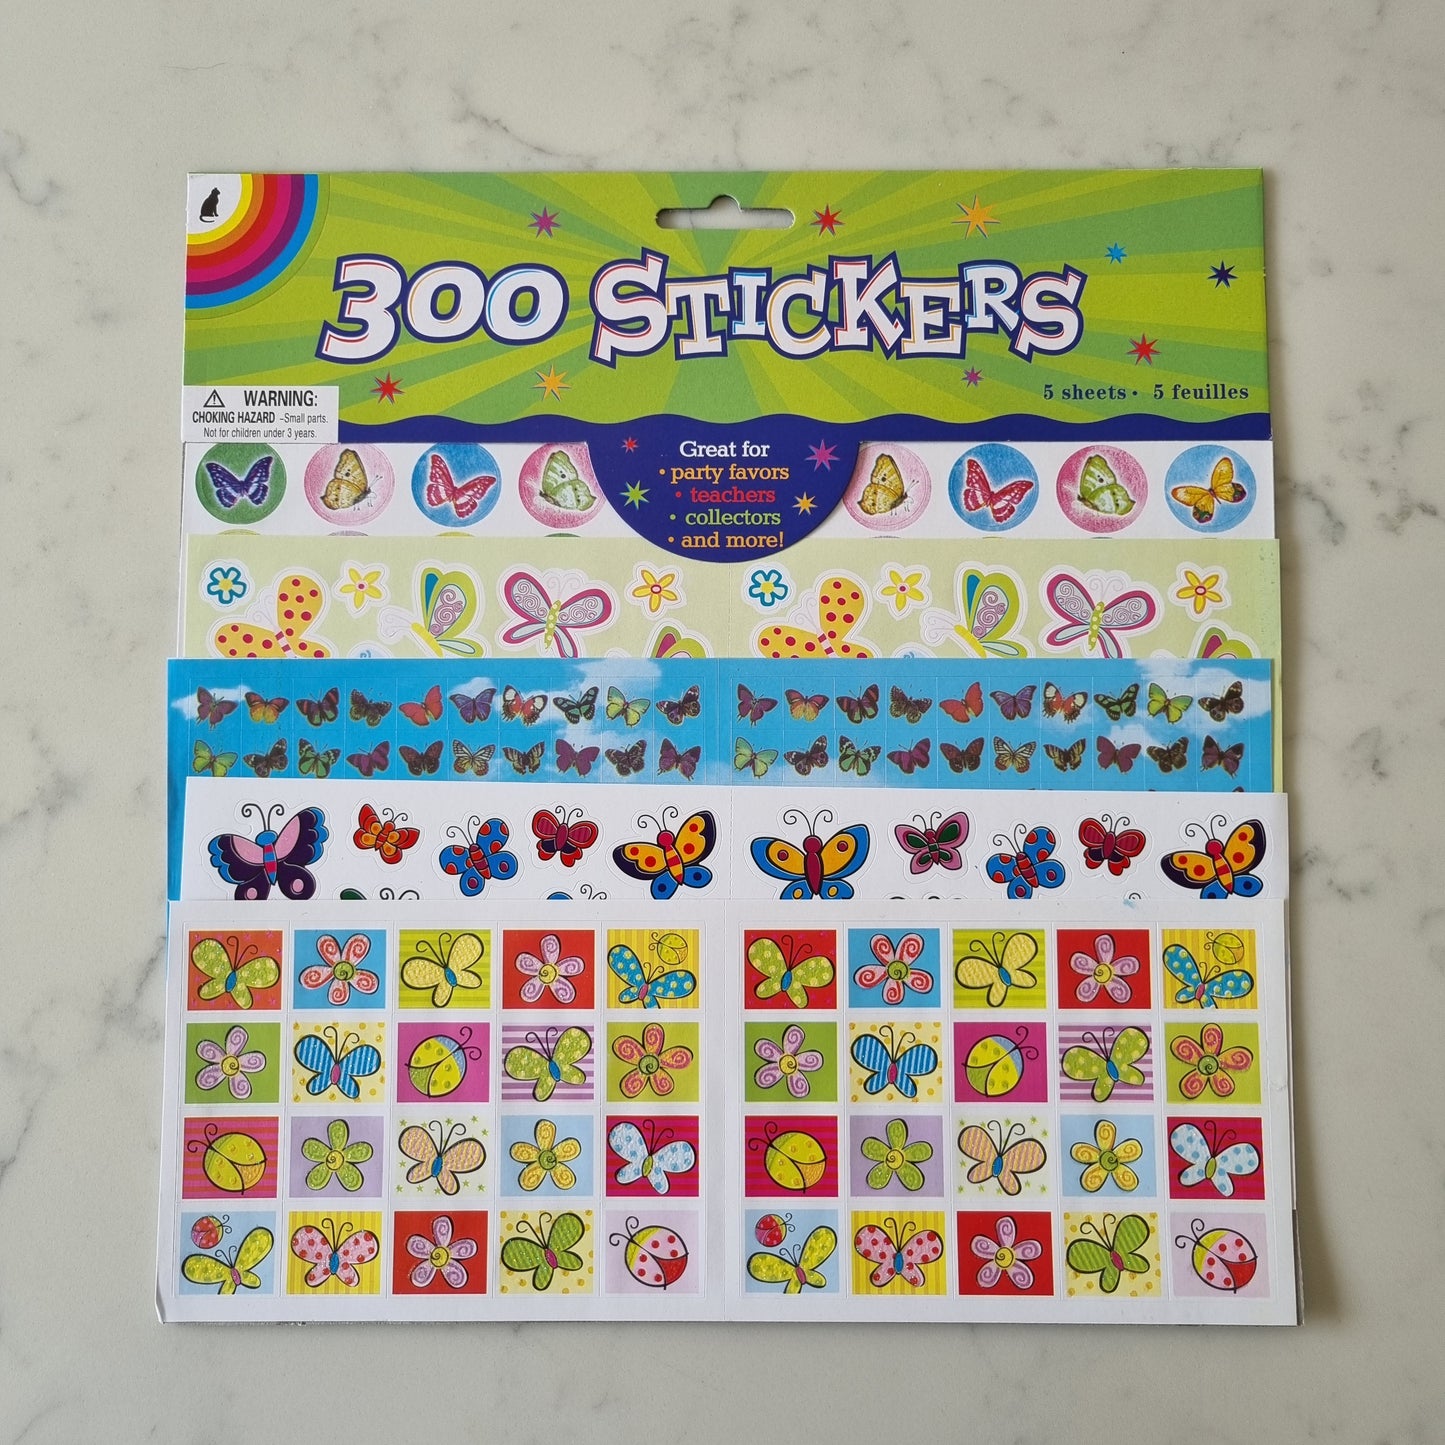 300 Stickers